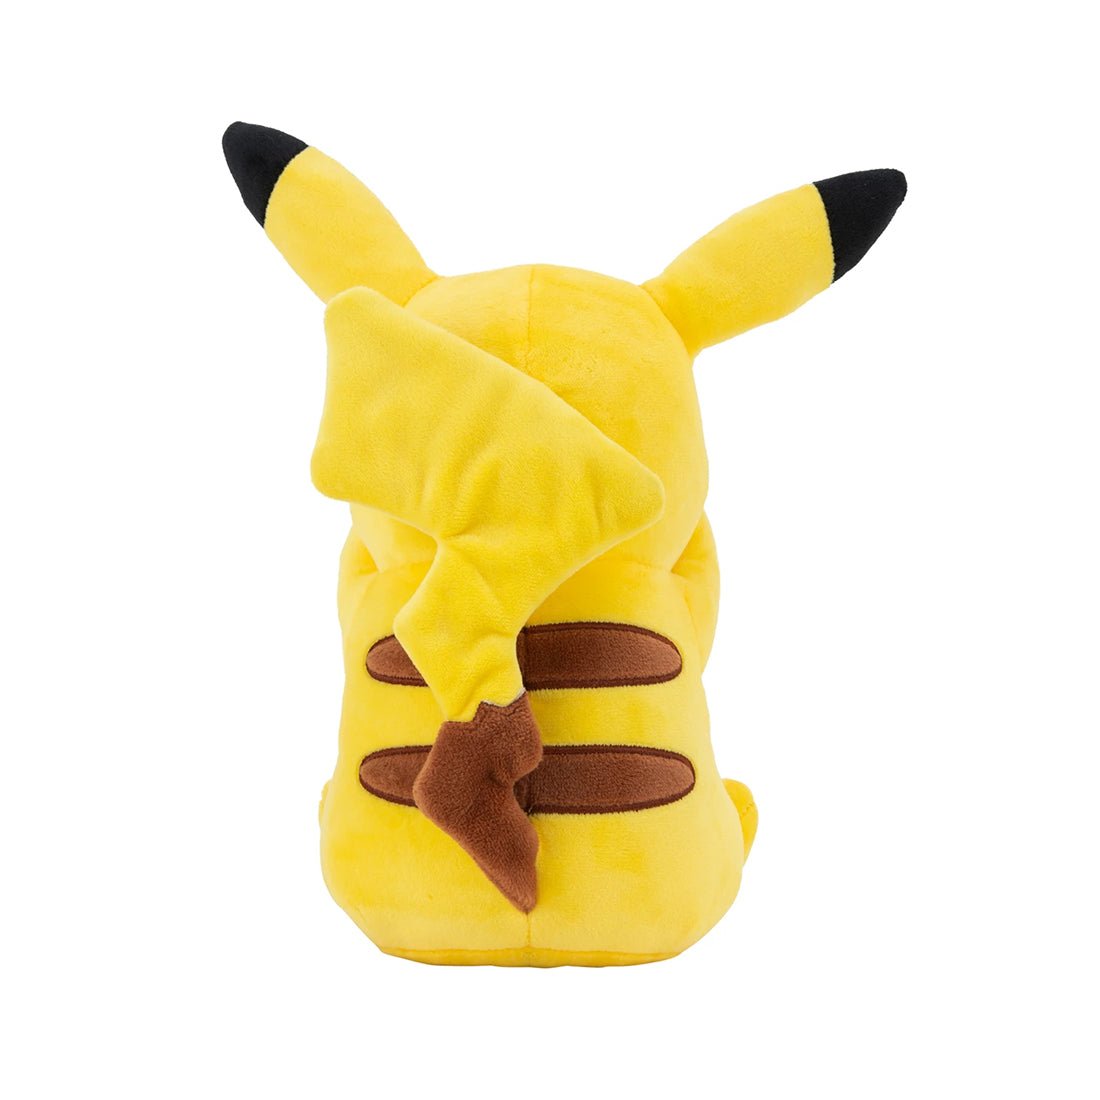 Pokemon Plush Toy - Pikachu - دمية - Store 974 | ستور ٩٧٤